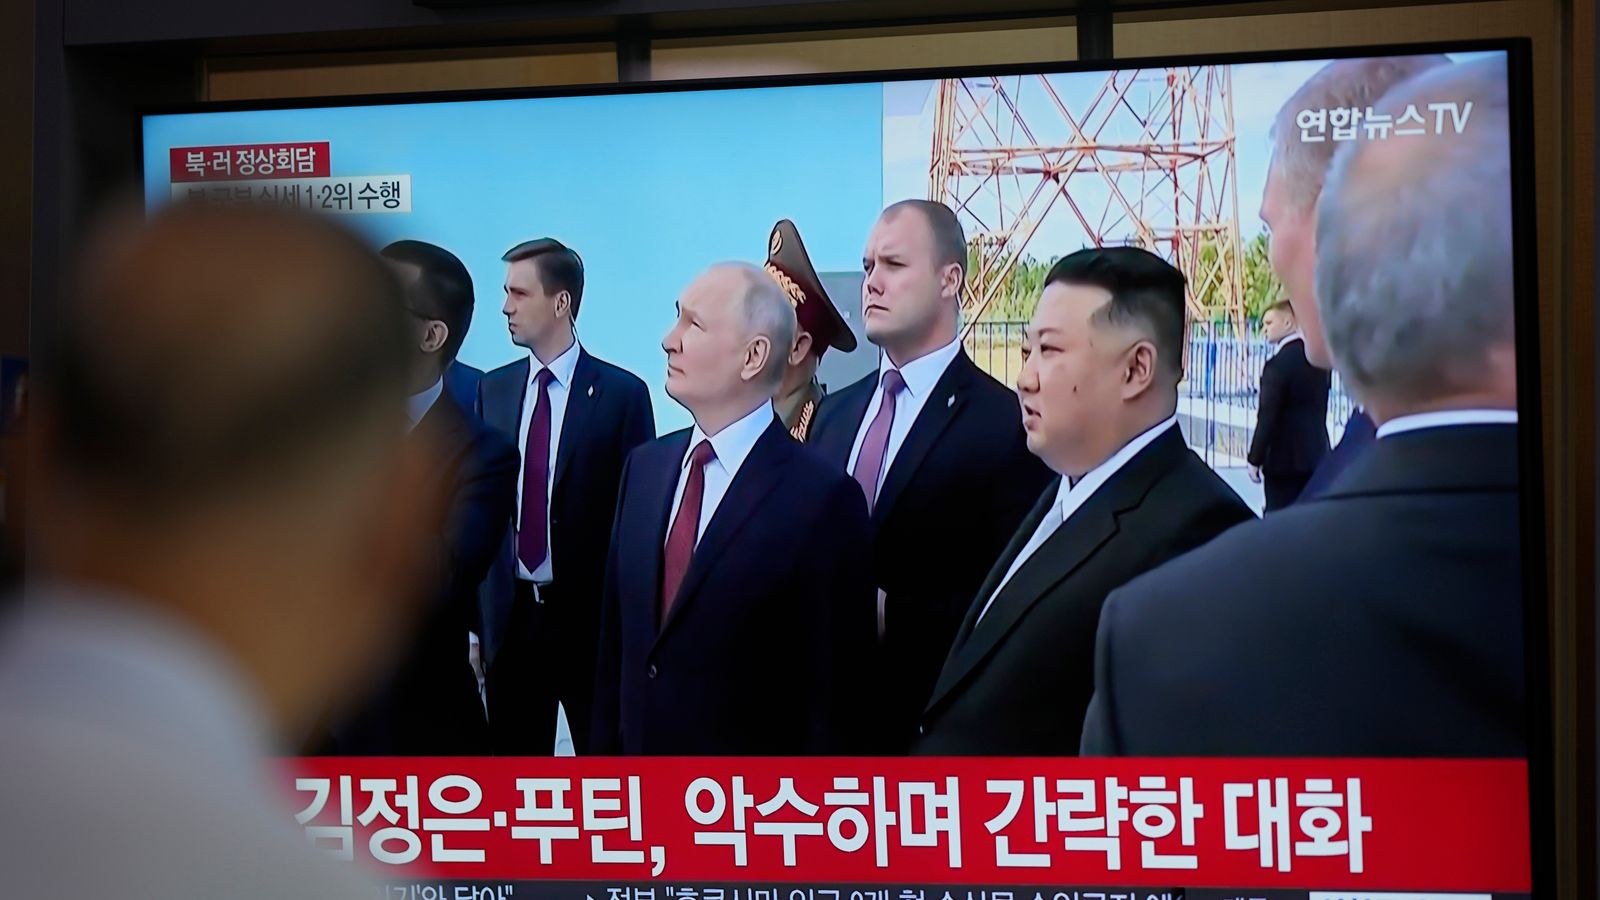 North Korea supports Russia's 'sacred fight' against the West, Kim Jong Un tells Vladimir Putin